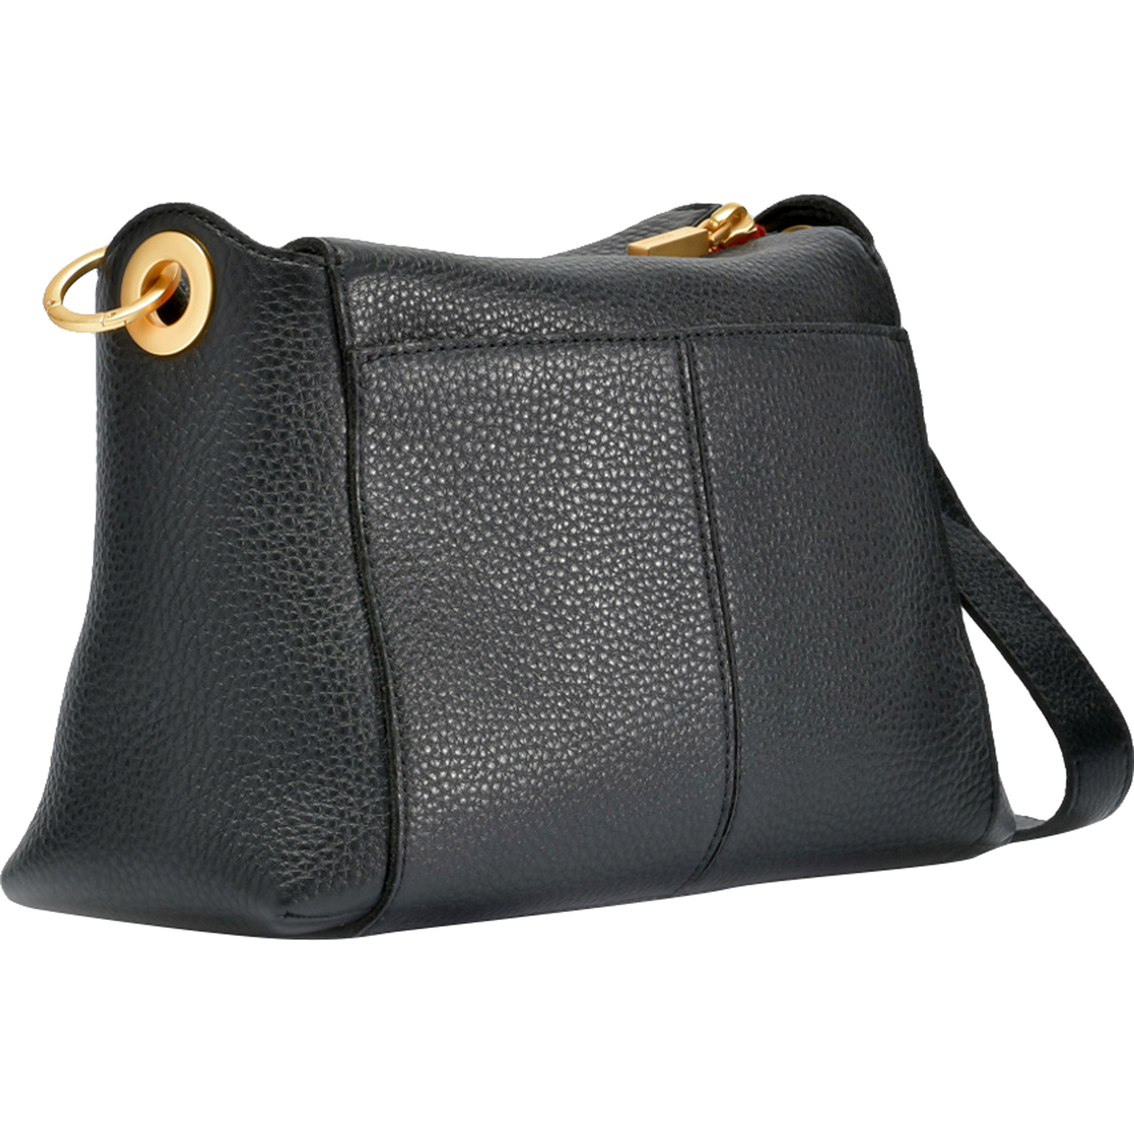 Hammitt Bryant Medium Handbag - Image 3 of 5